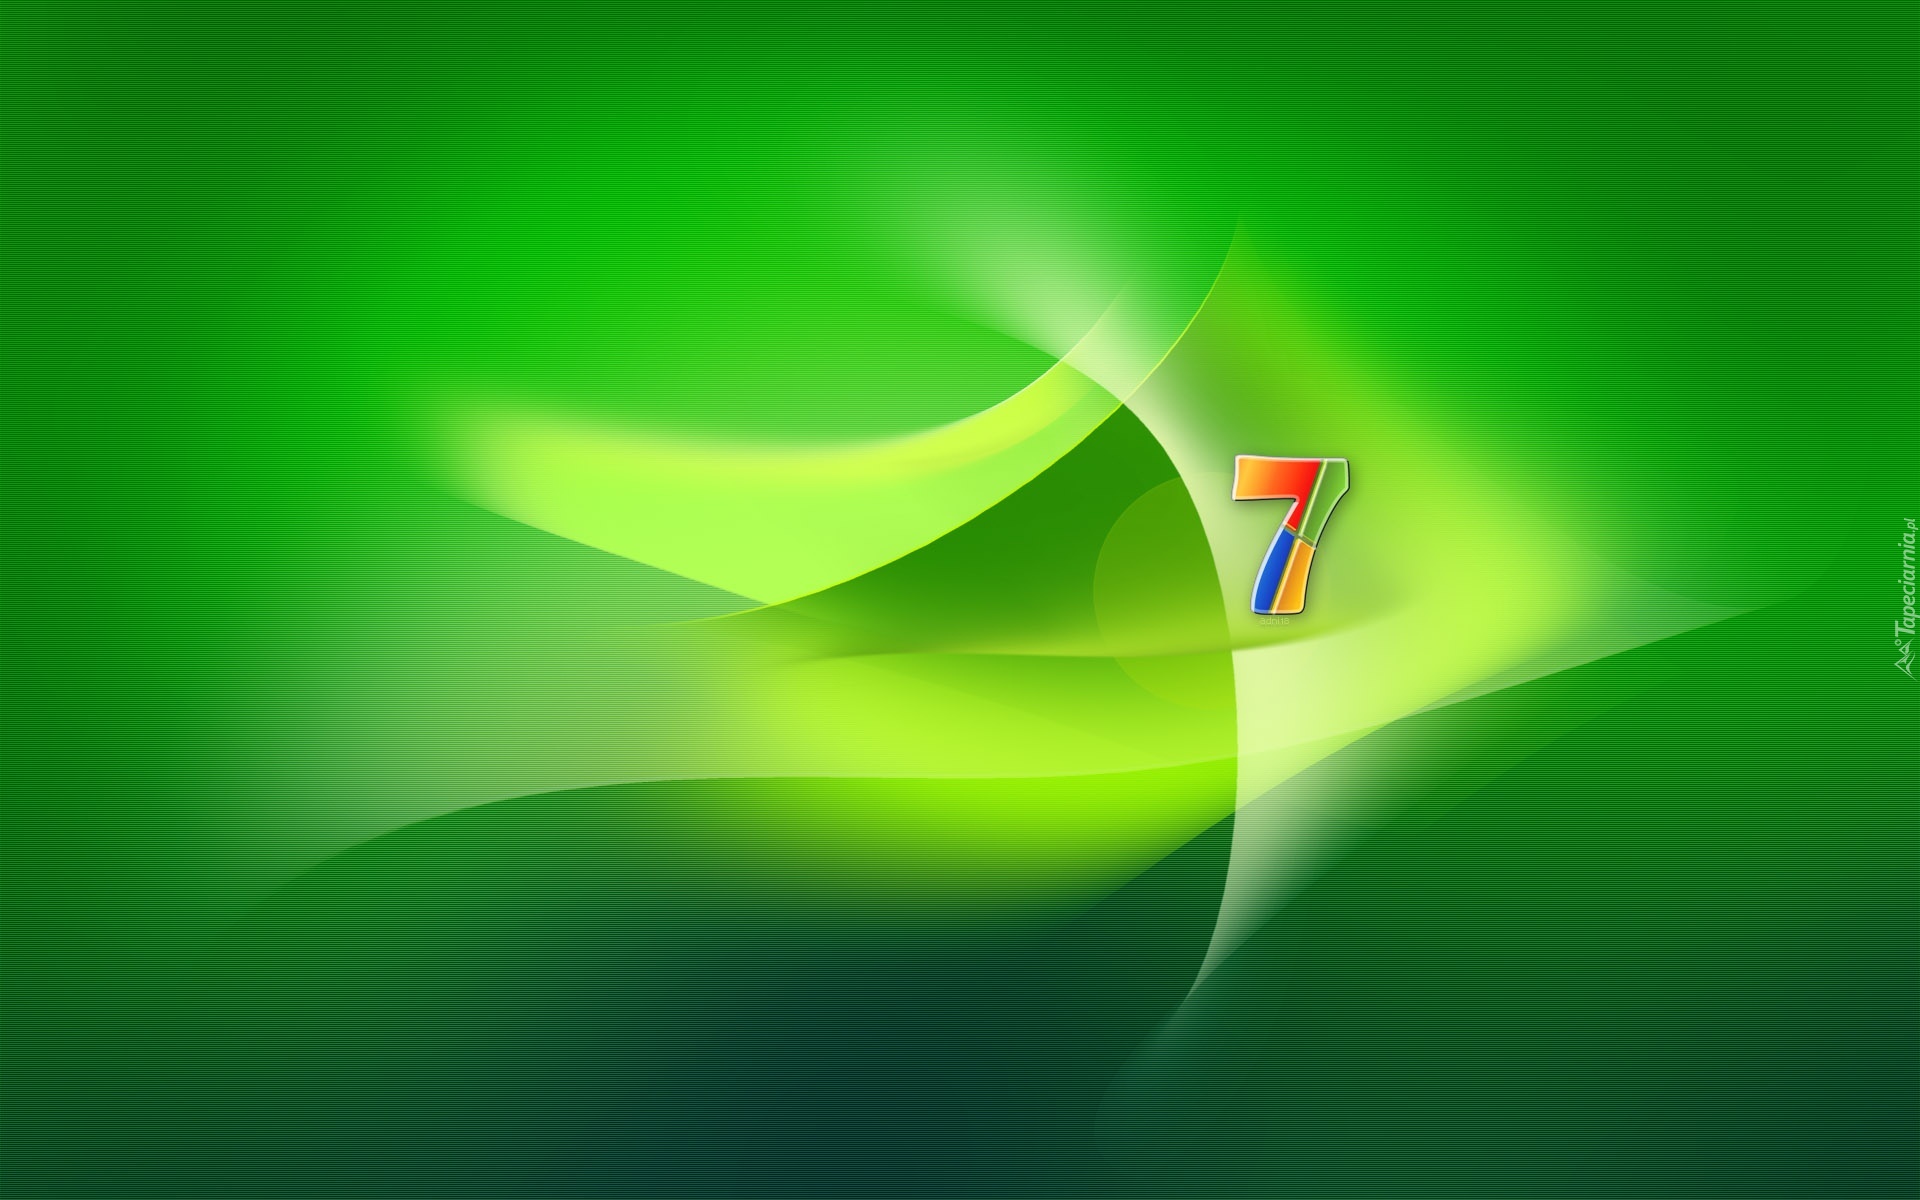 Windows 7, Zielone, Pasy, Smugi